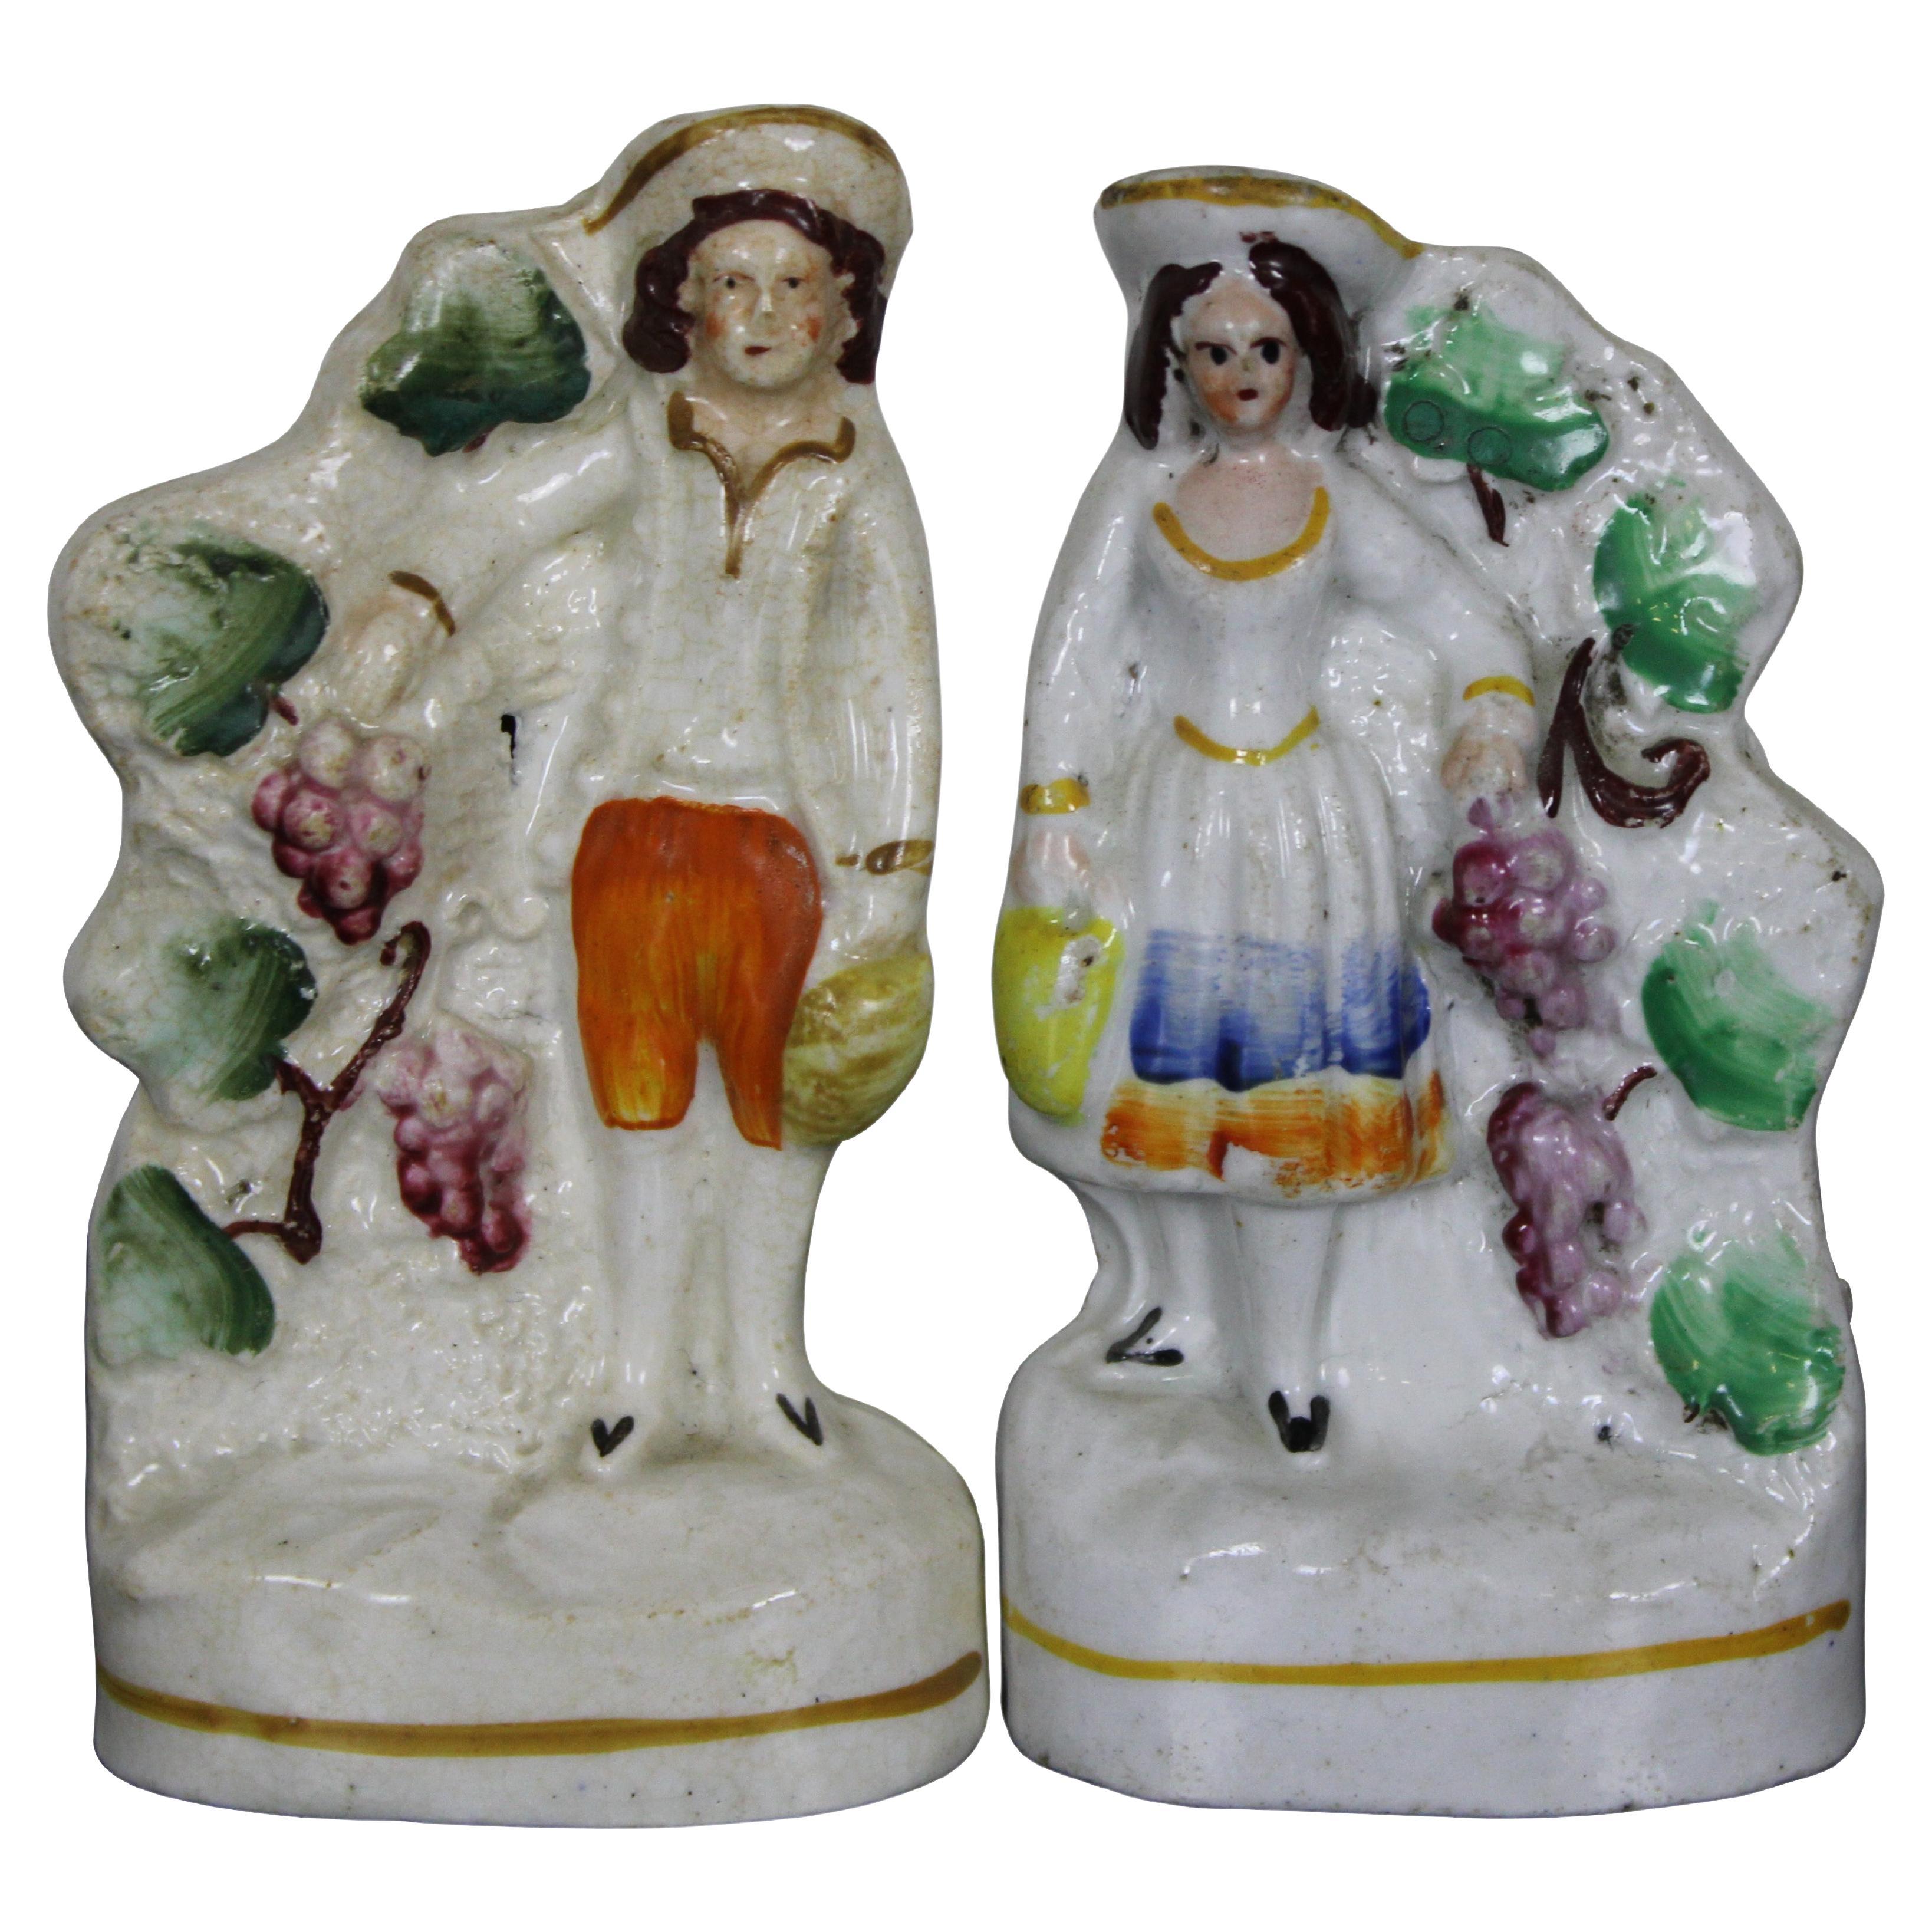 2 Antique English Staffordshire Porcelain Figurines Grapevine Harvest Couple